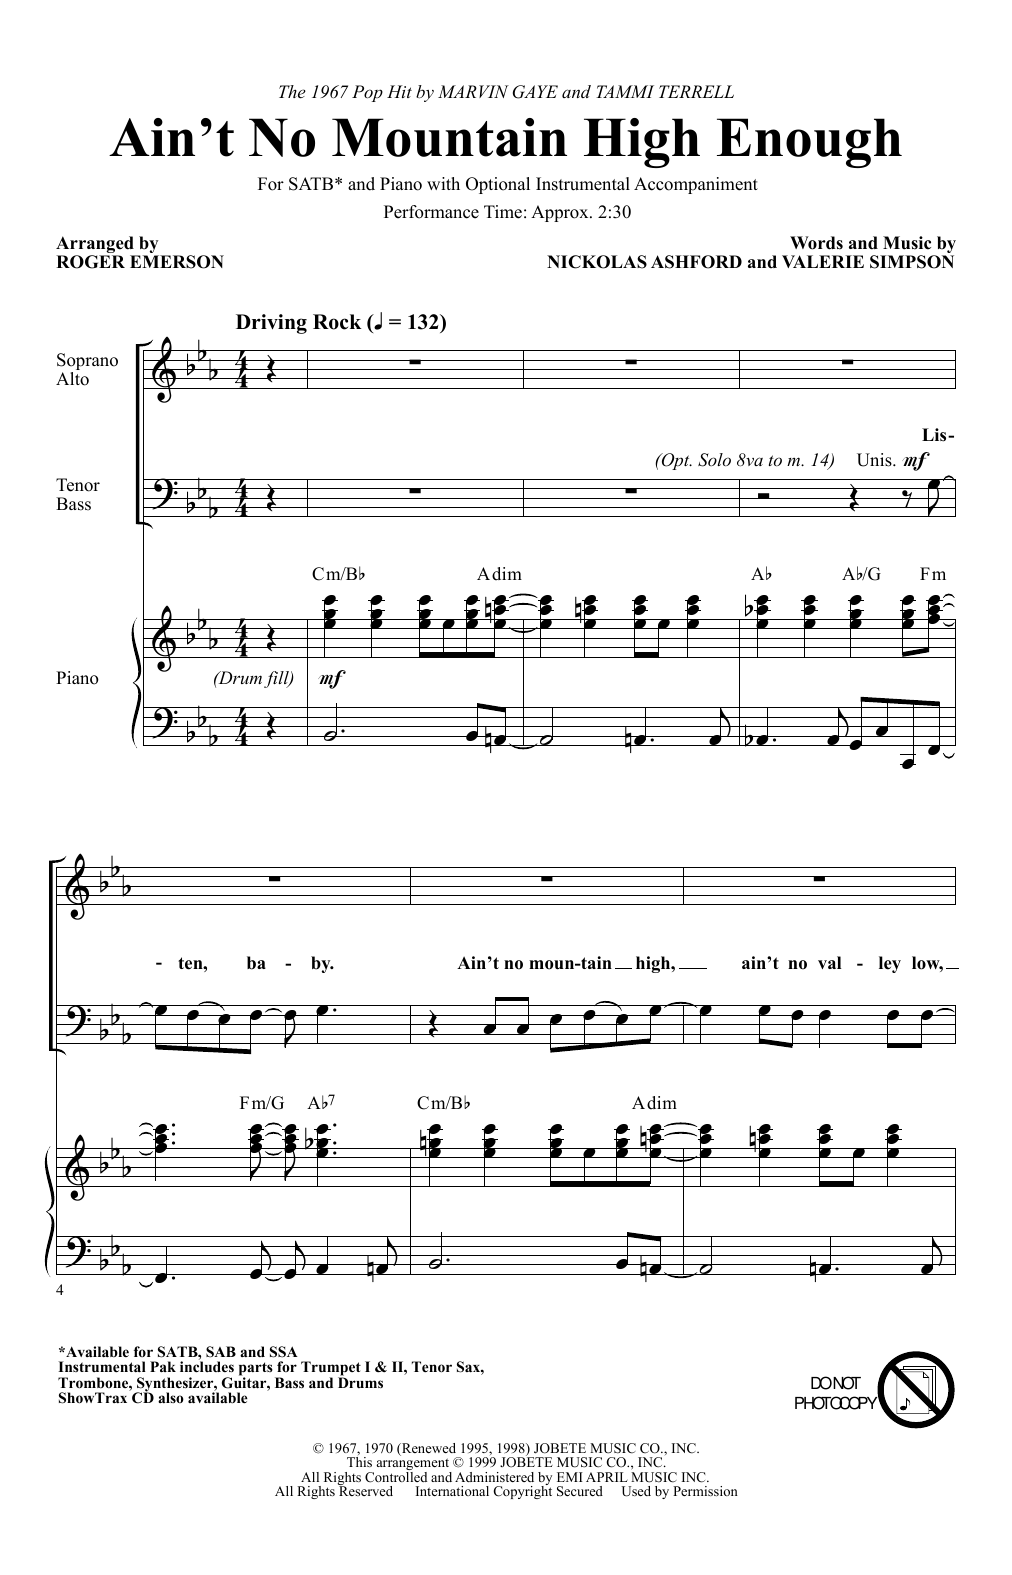 Marvin Gaye & Tammi Terrell Ain't No Mountain High Enough (arr. Roger Emerson) Sheet Music Notes & Chords for SATB Choir - Download or Print PDF